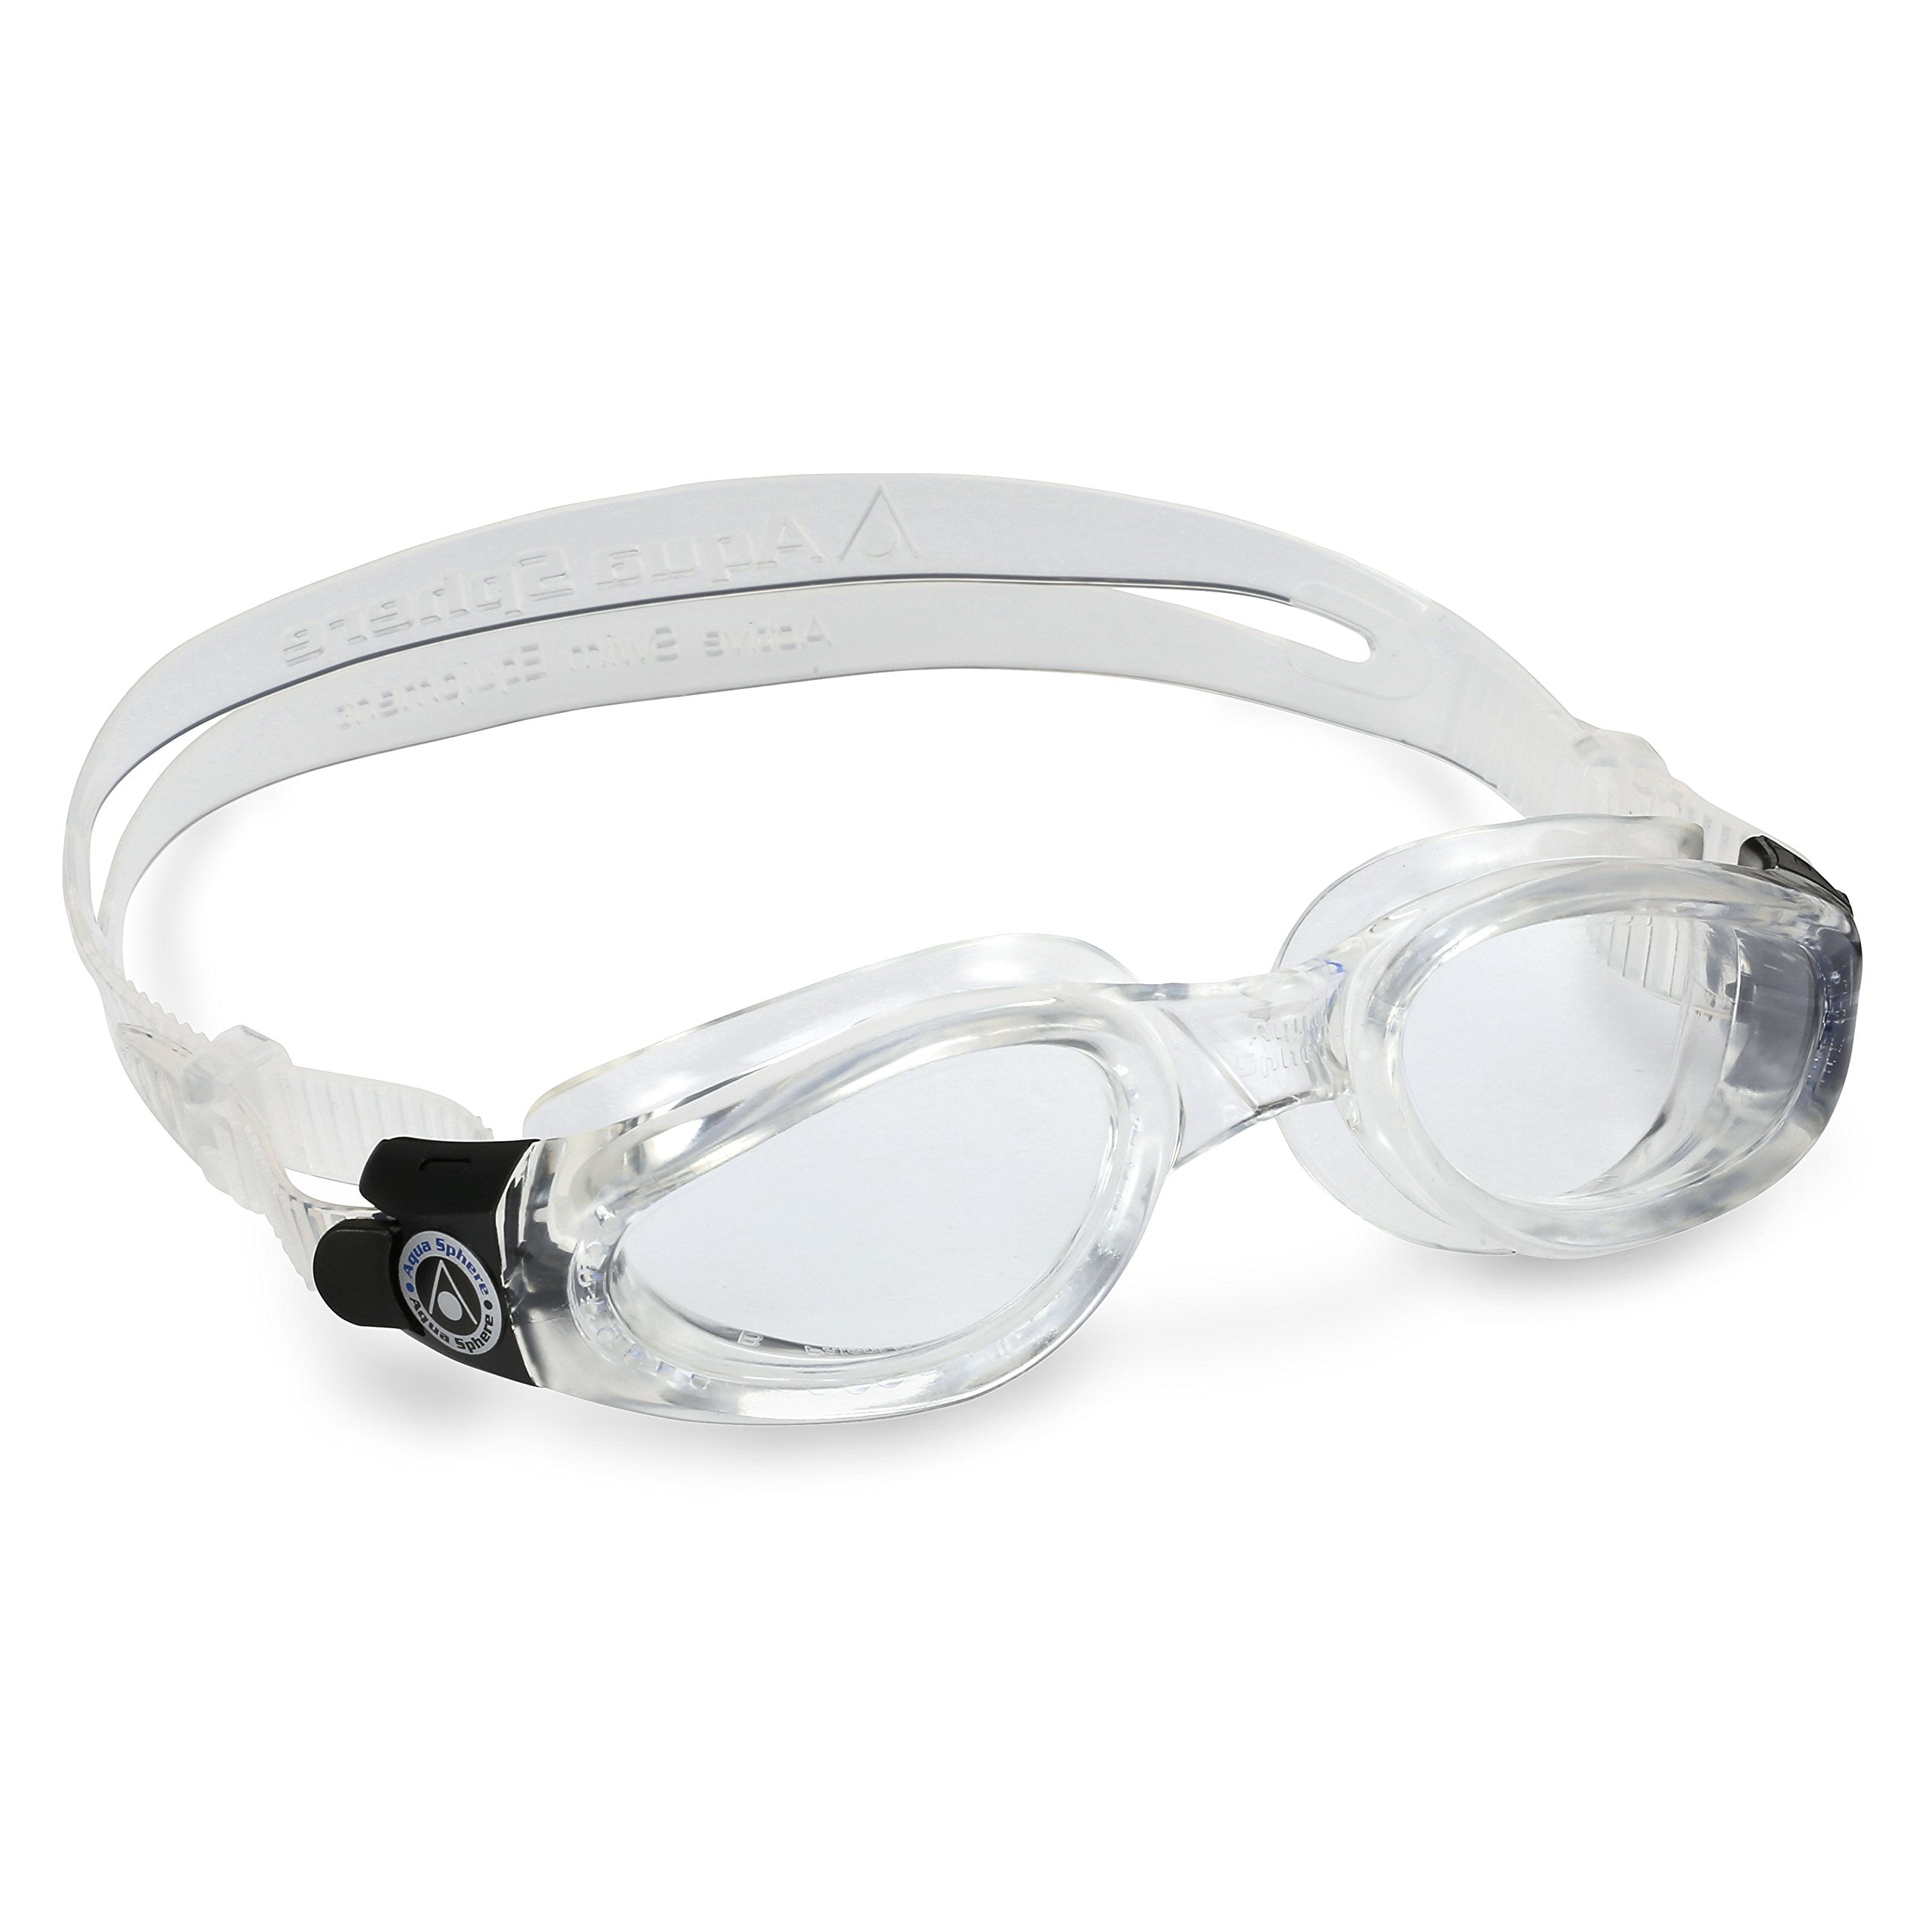 Aqua Sphere Kaiman Swim Goggle Clear Lens Black Frame Swimming